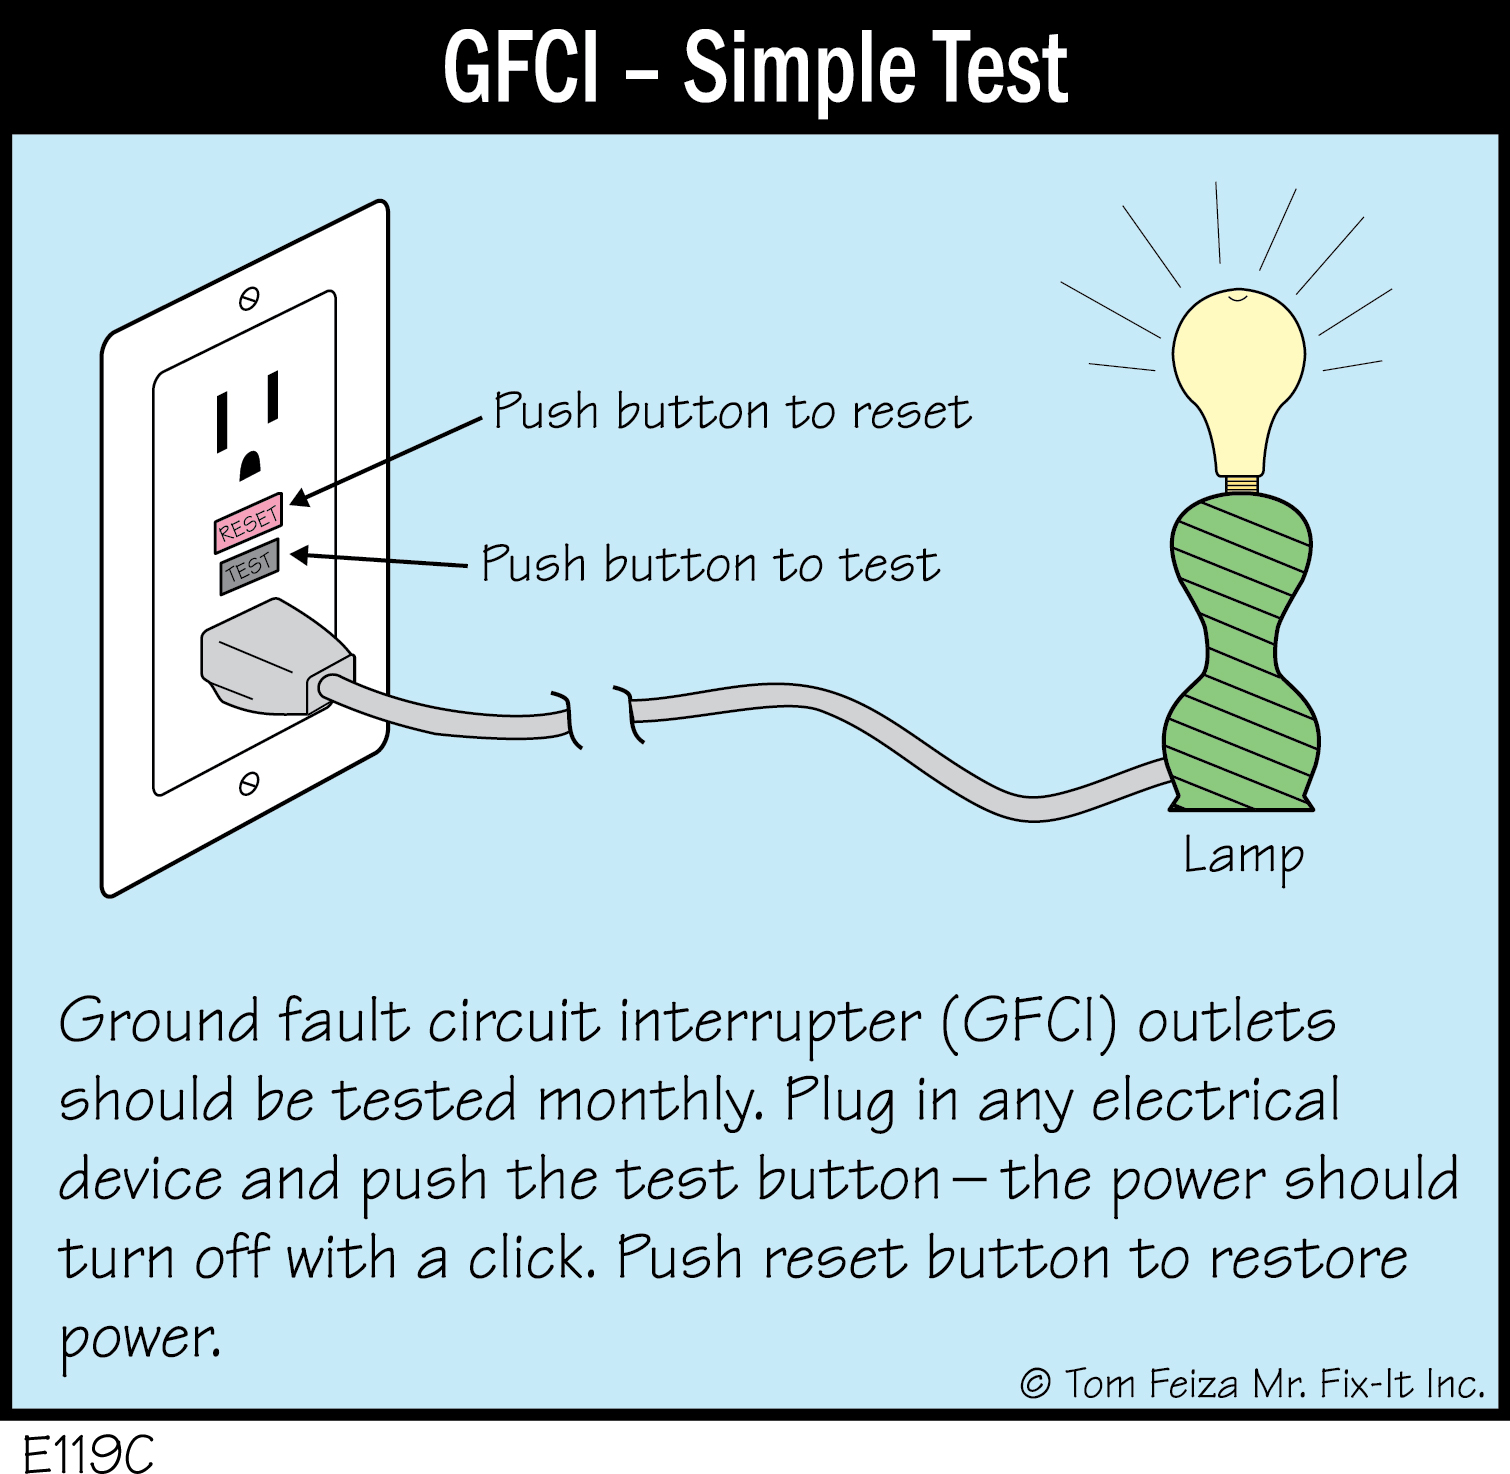 E119C - GFCI - Simple Test